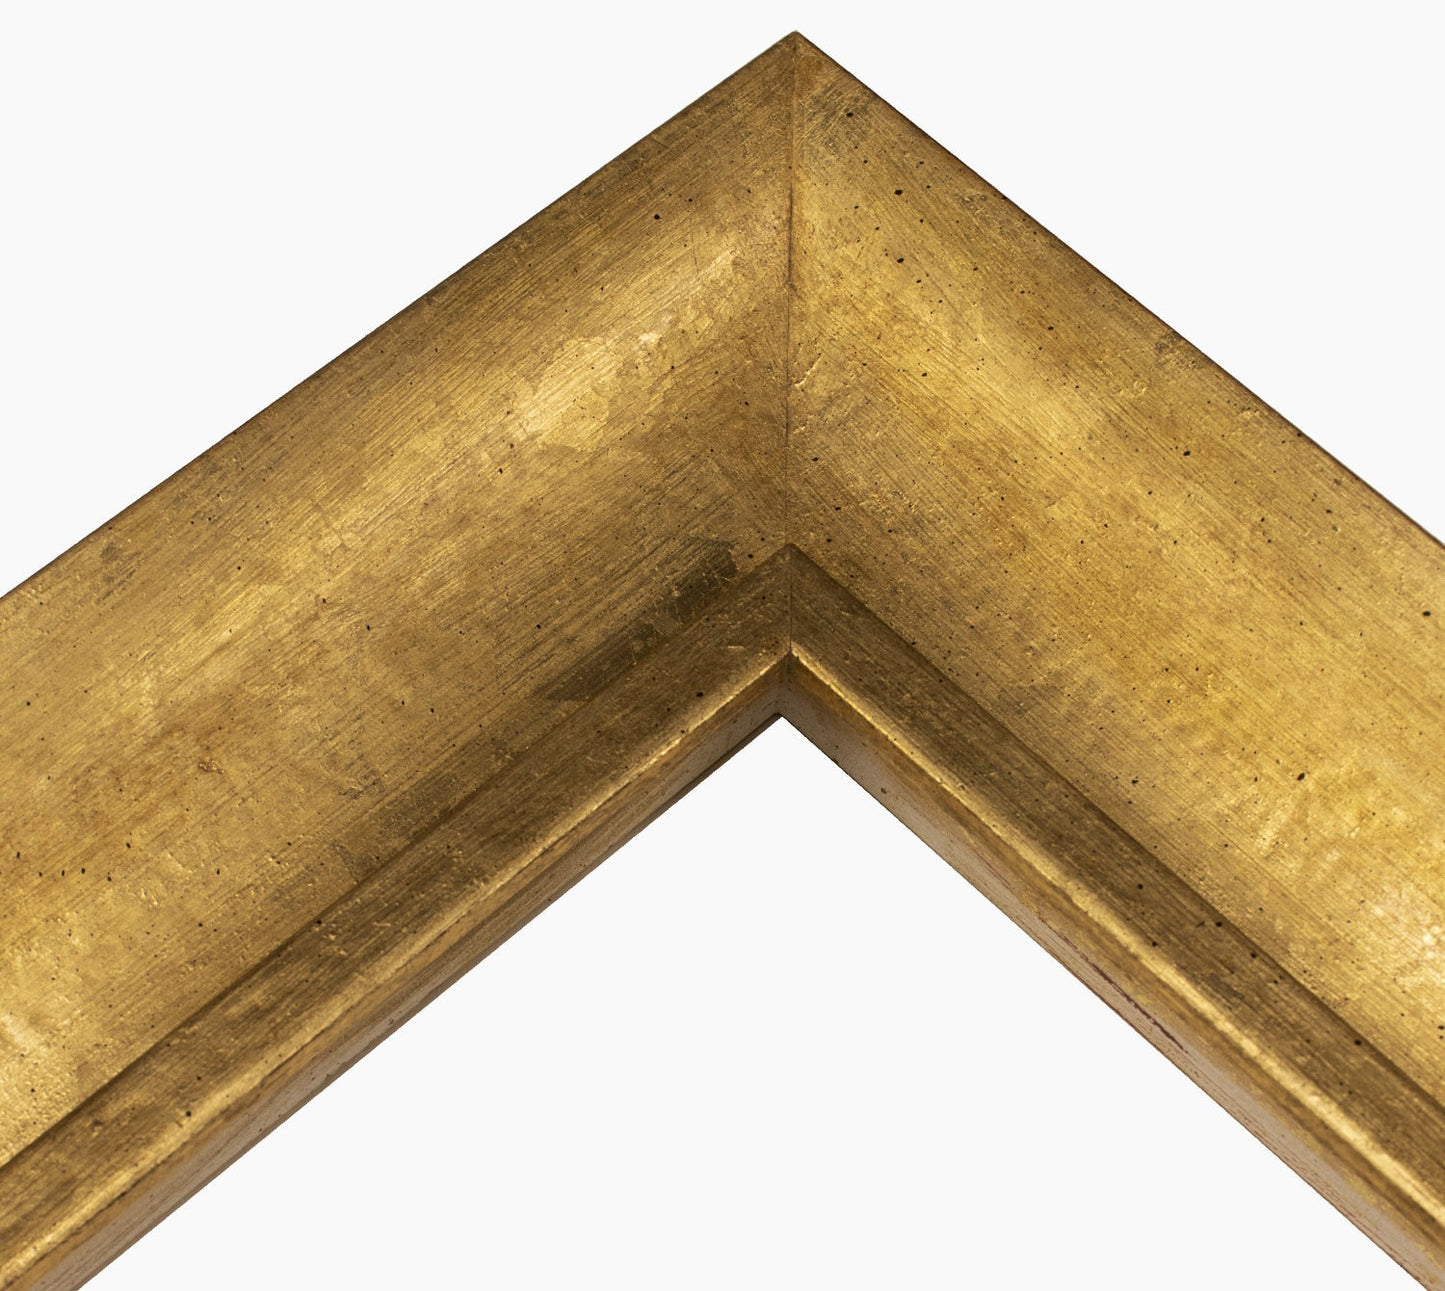 448.010 cadre en bois à la feuille d'or mesure de profil 80x45 mm Lombarda cornici S.n.c.